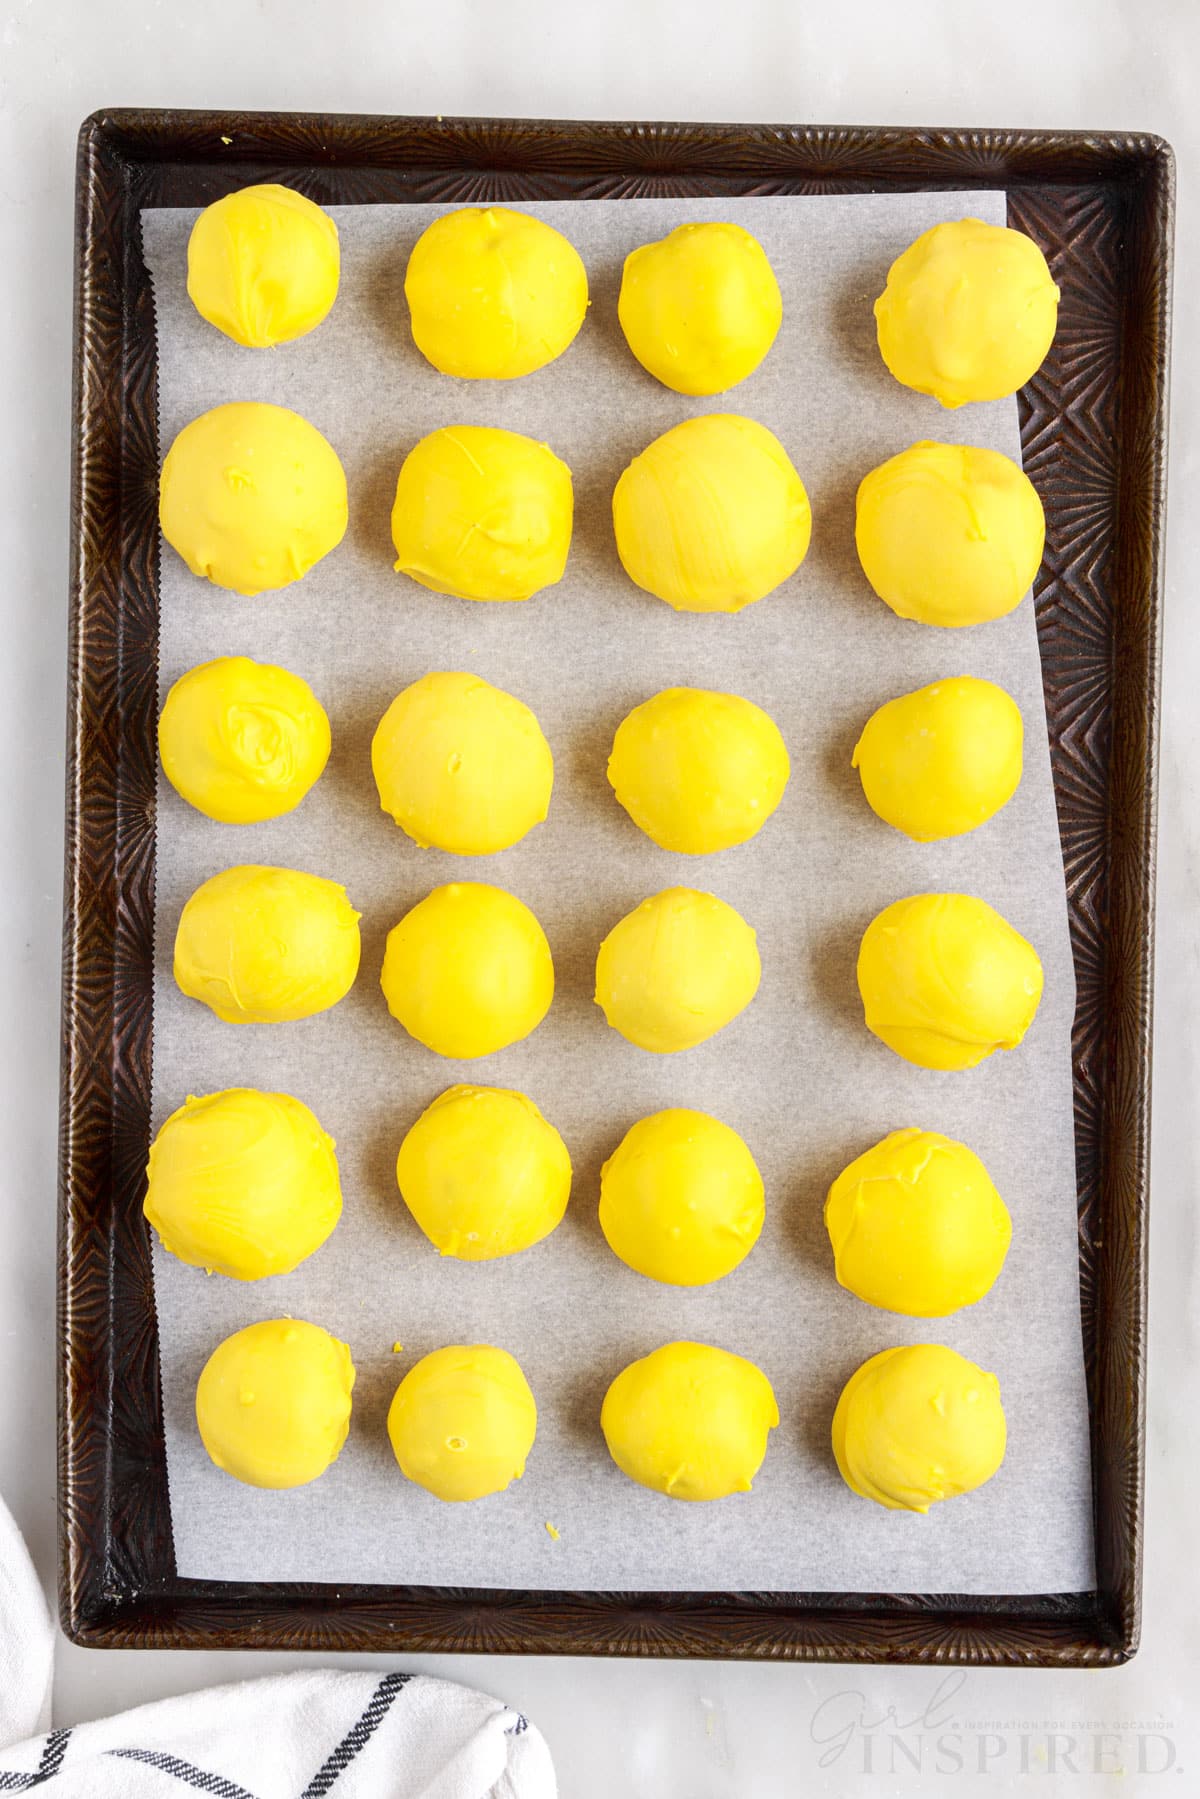 Yellow coated lemon blueberry bites on a sheet pan.